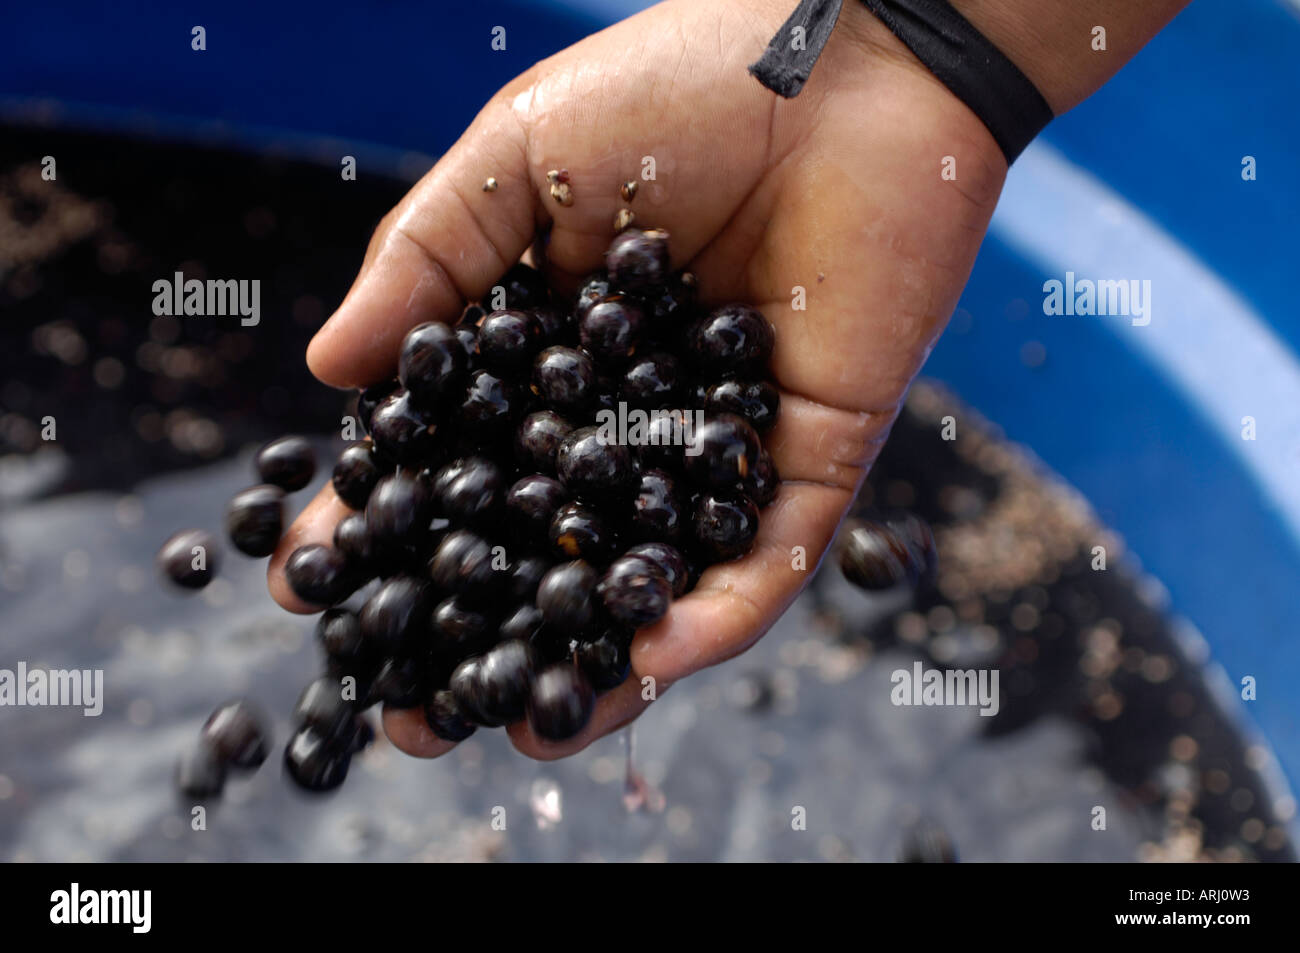 Sampling consistency of acai berries soaking in water in a blue plastic bowl Stock Photo